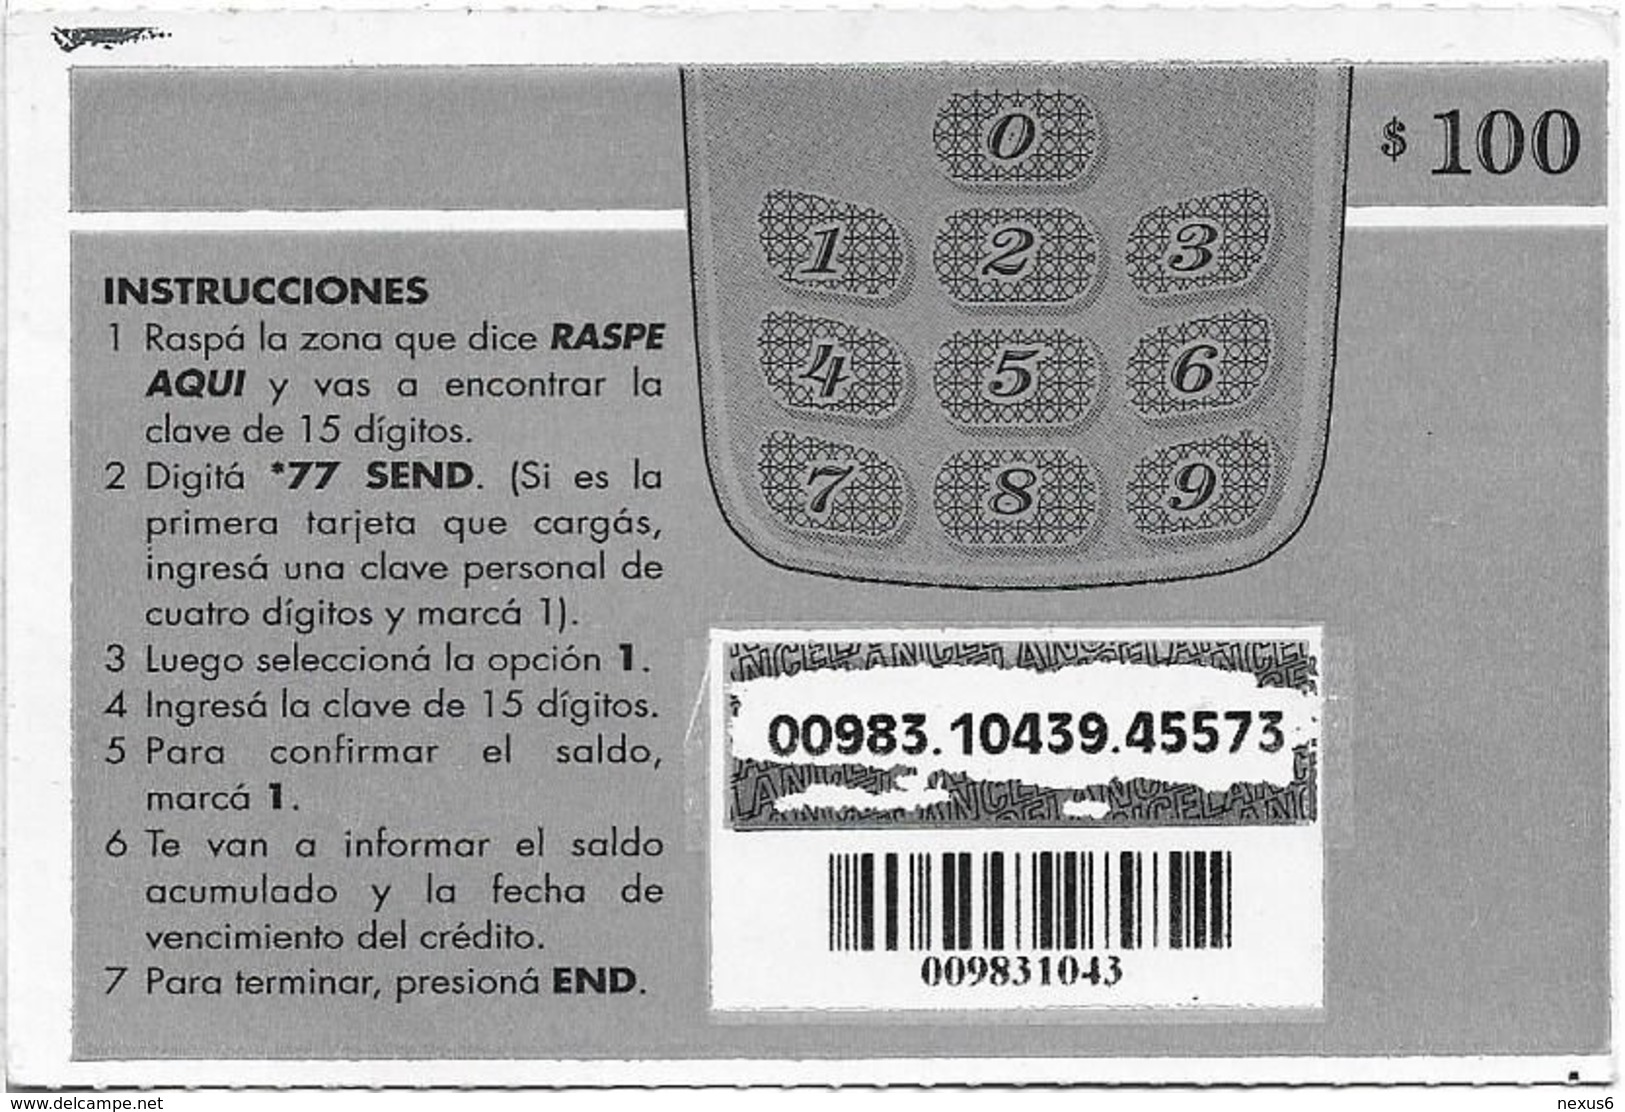 Uruguay - Ancel - 10o Aniversario!!!, (Big Size) GSM Refill 100$, Used - Uruguay